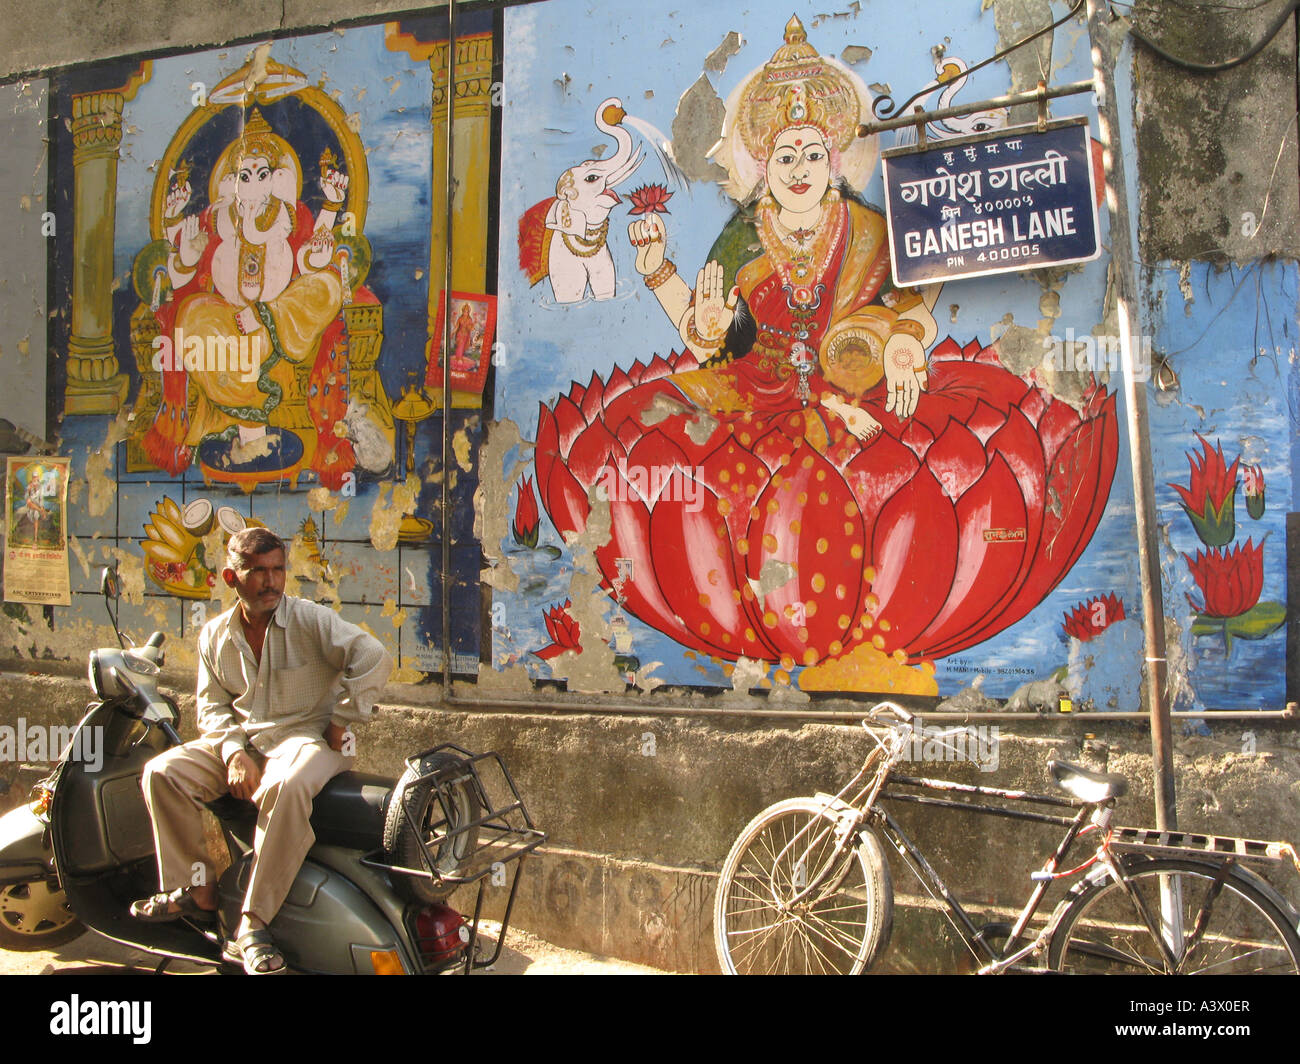 INDIA Religious murals in the streets of Mumbai Photo Julio Etchart Stock Photo